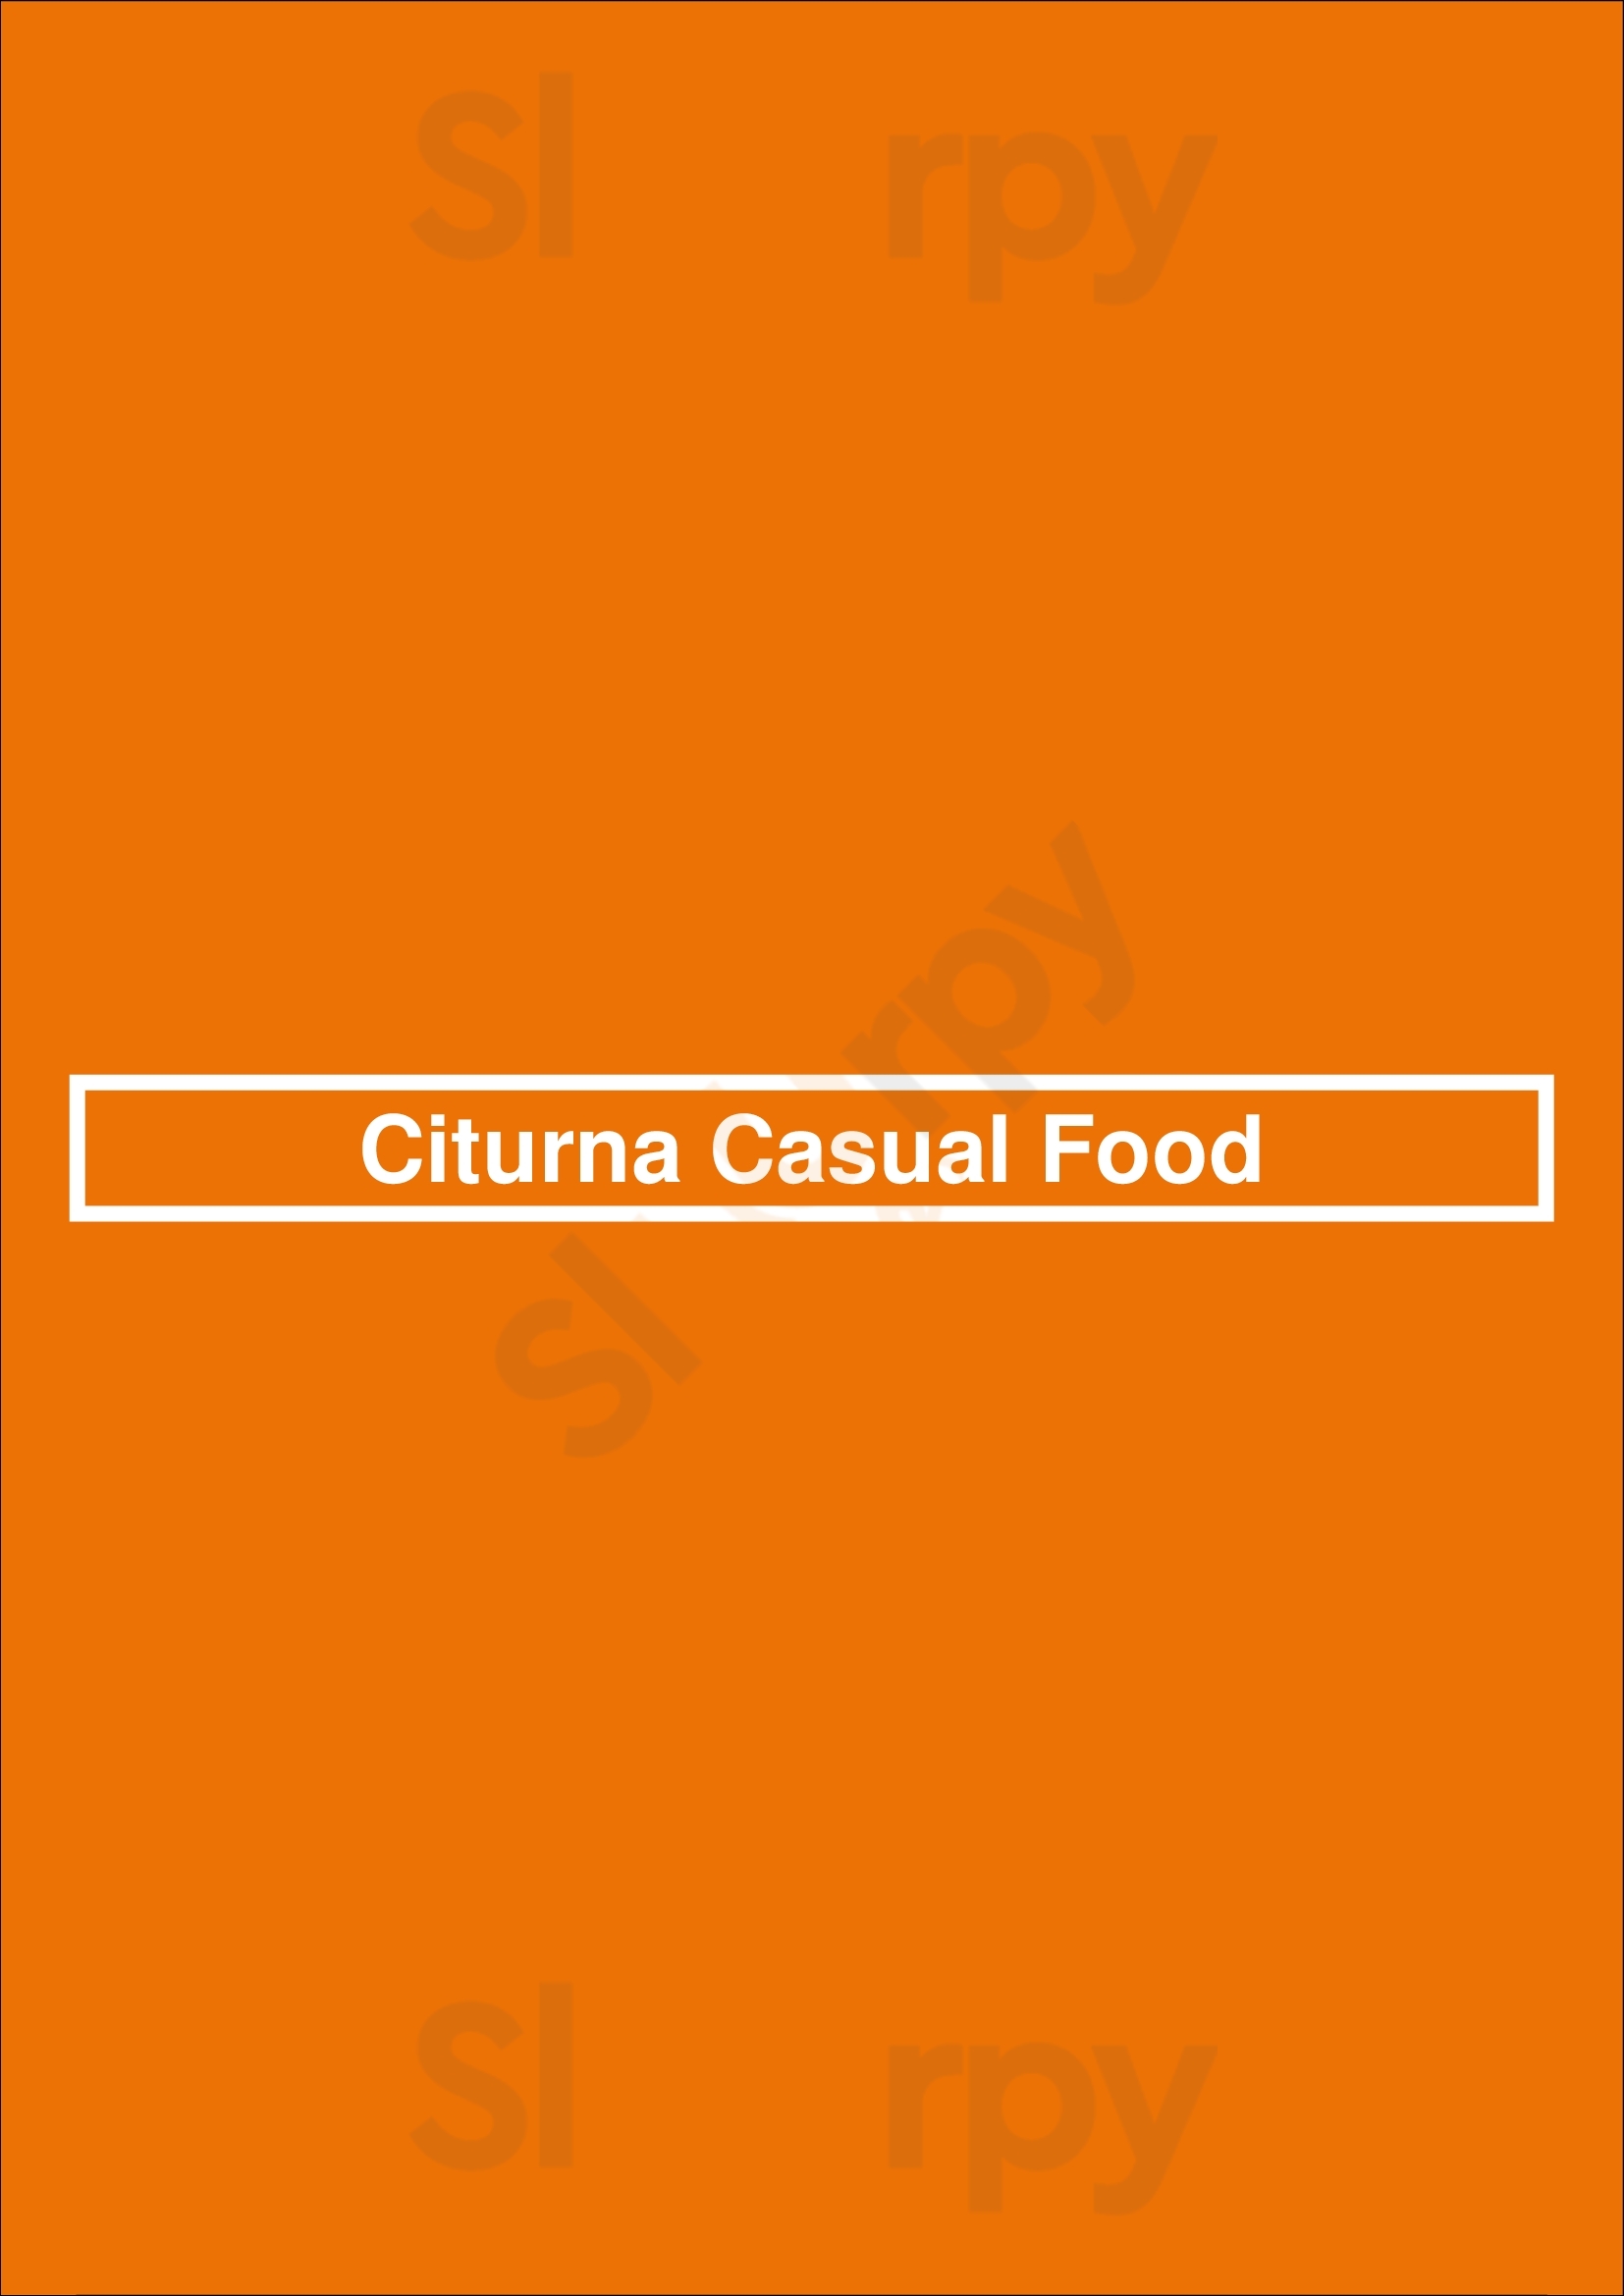 Citurna Casual Food Playa Blanca Menu - 1